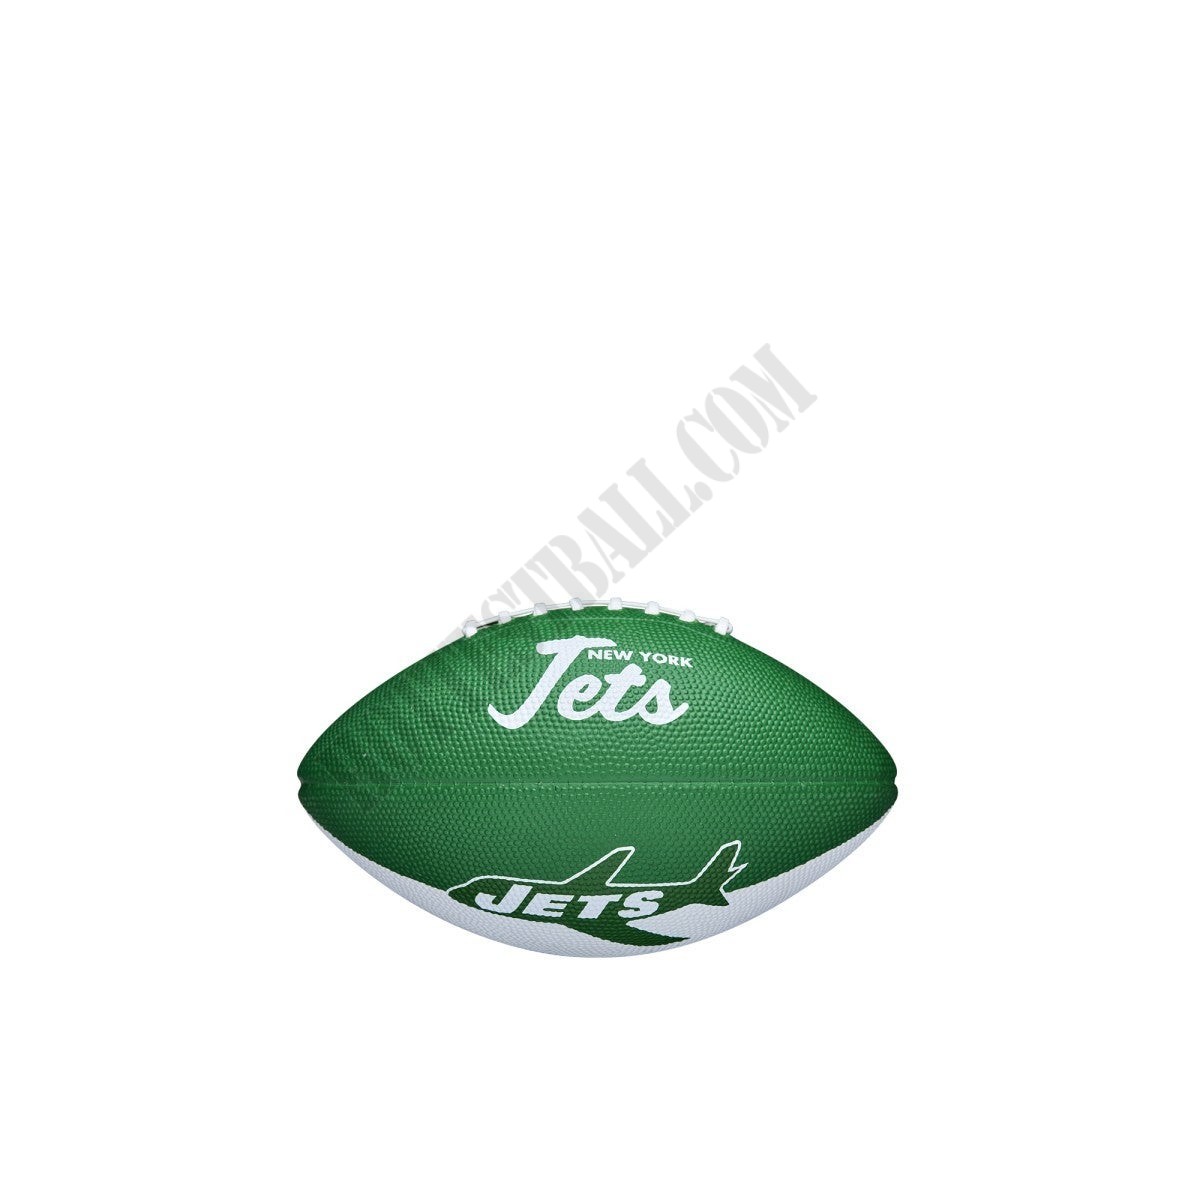 NFL Retro Mini Football - New York Jets ● Wilson Promotions - -0